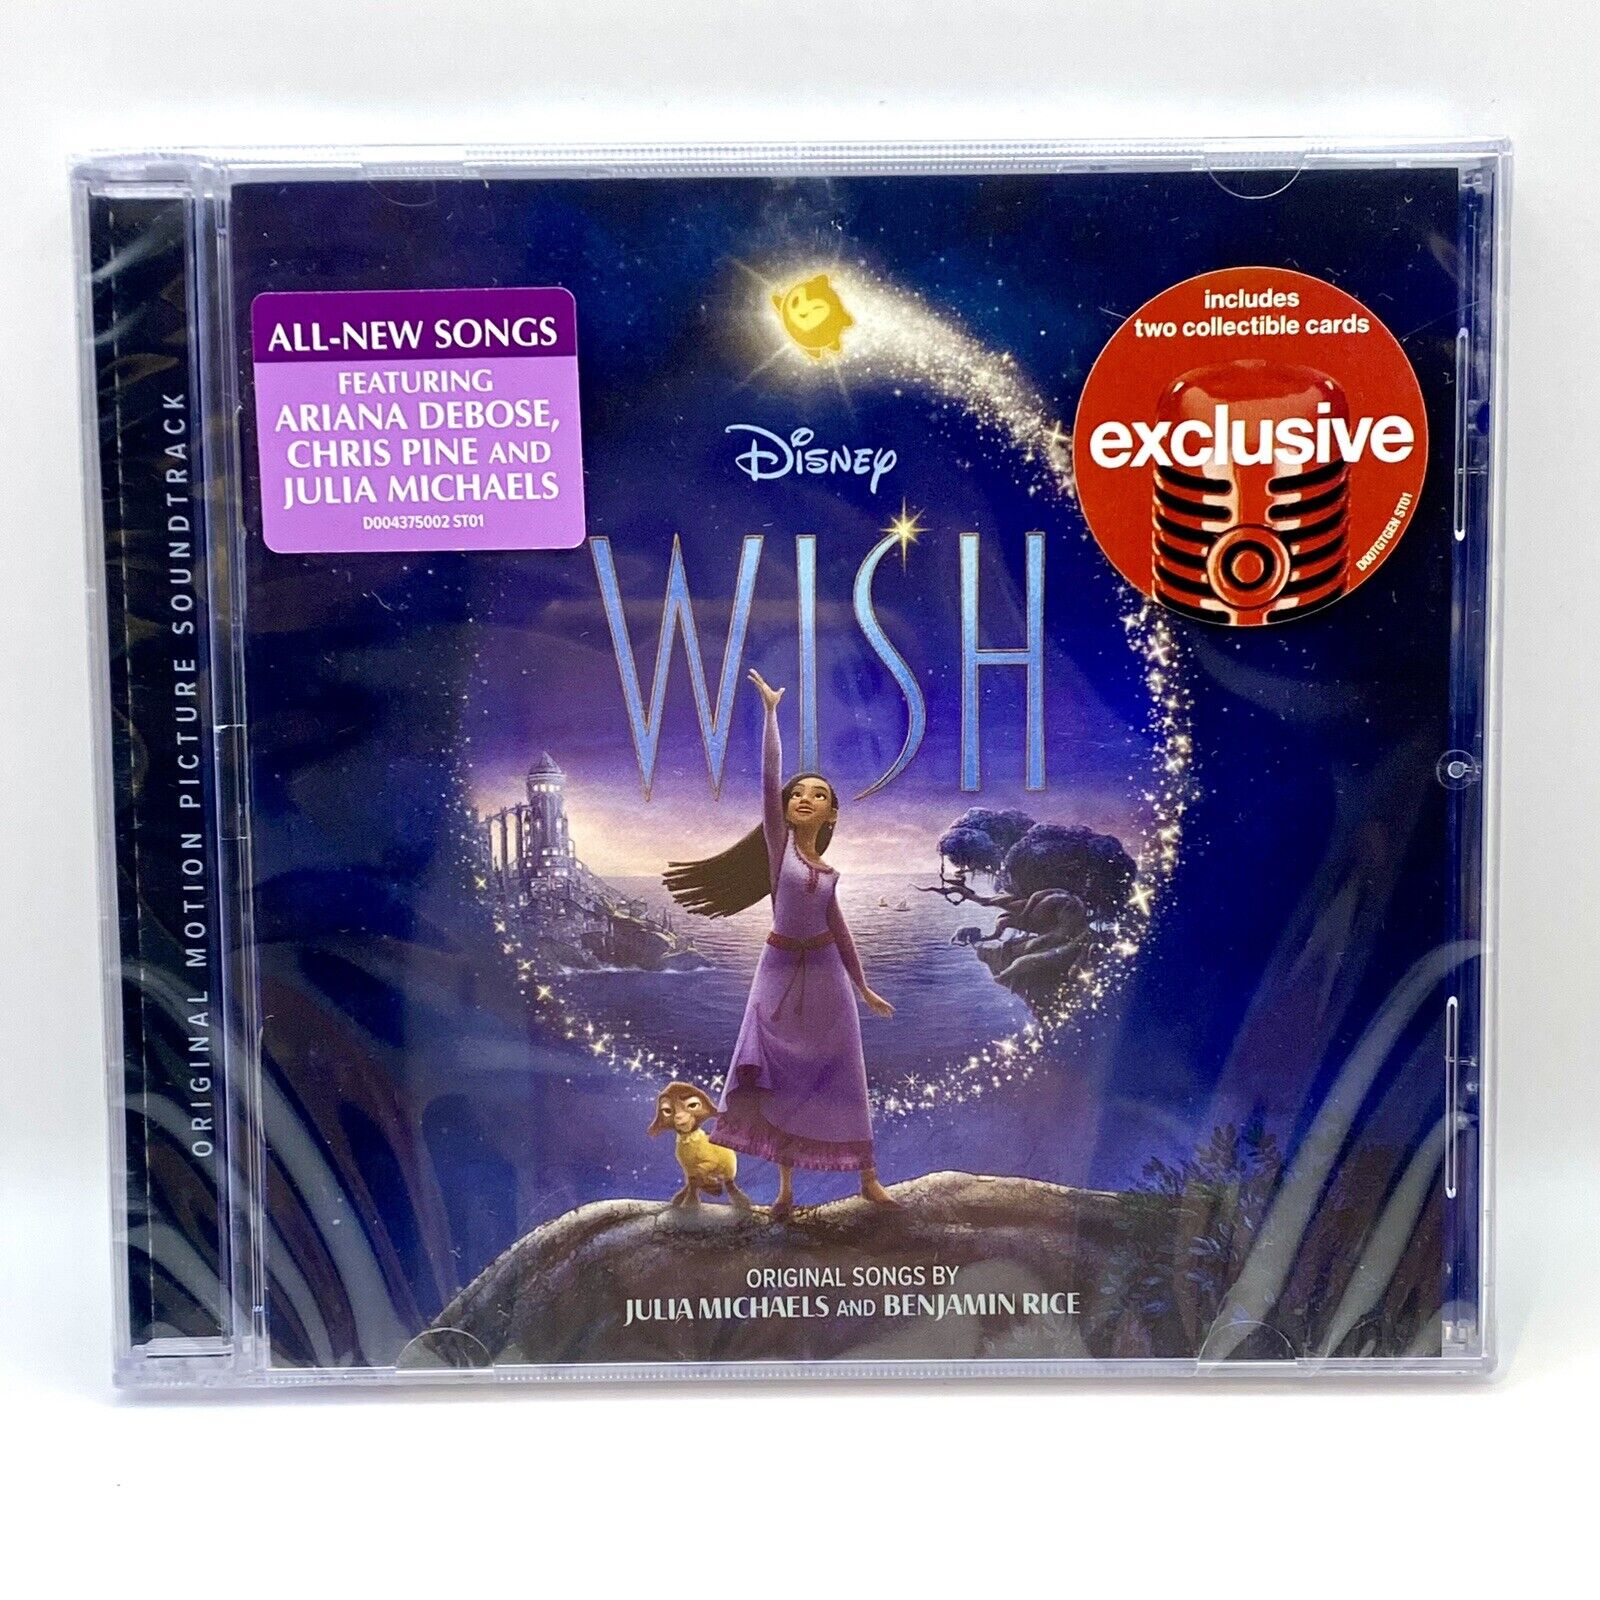 Disney WISH Original Soundtrack New Sealed CD Album Ariana Debose Chris Pine